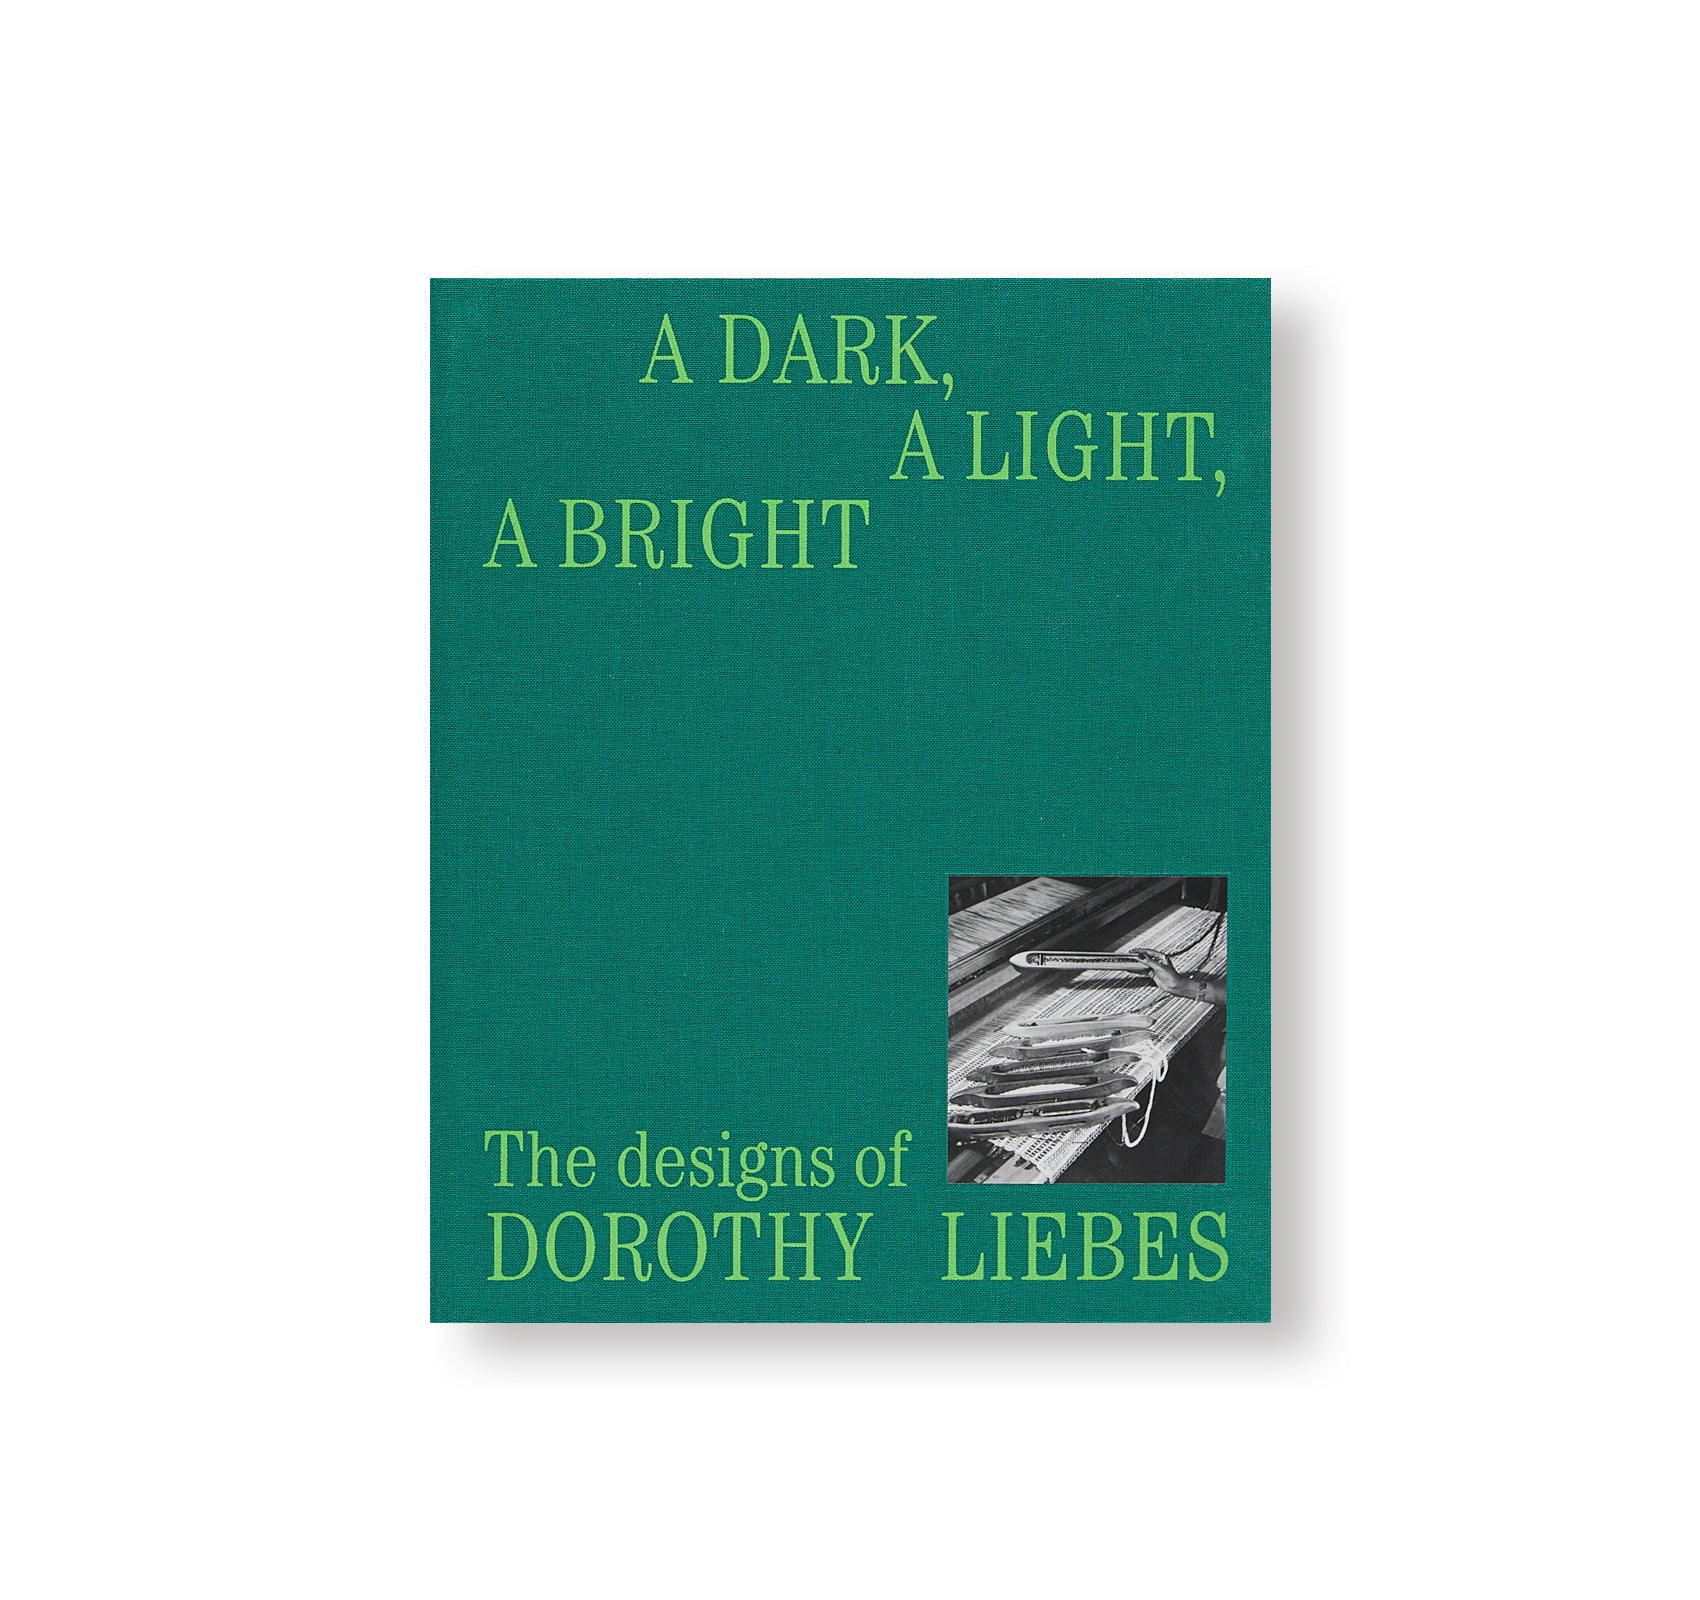 A DARK, A LIGHT, A BRIGHT by Dorothy Liebes